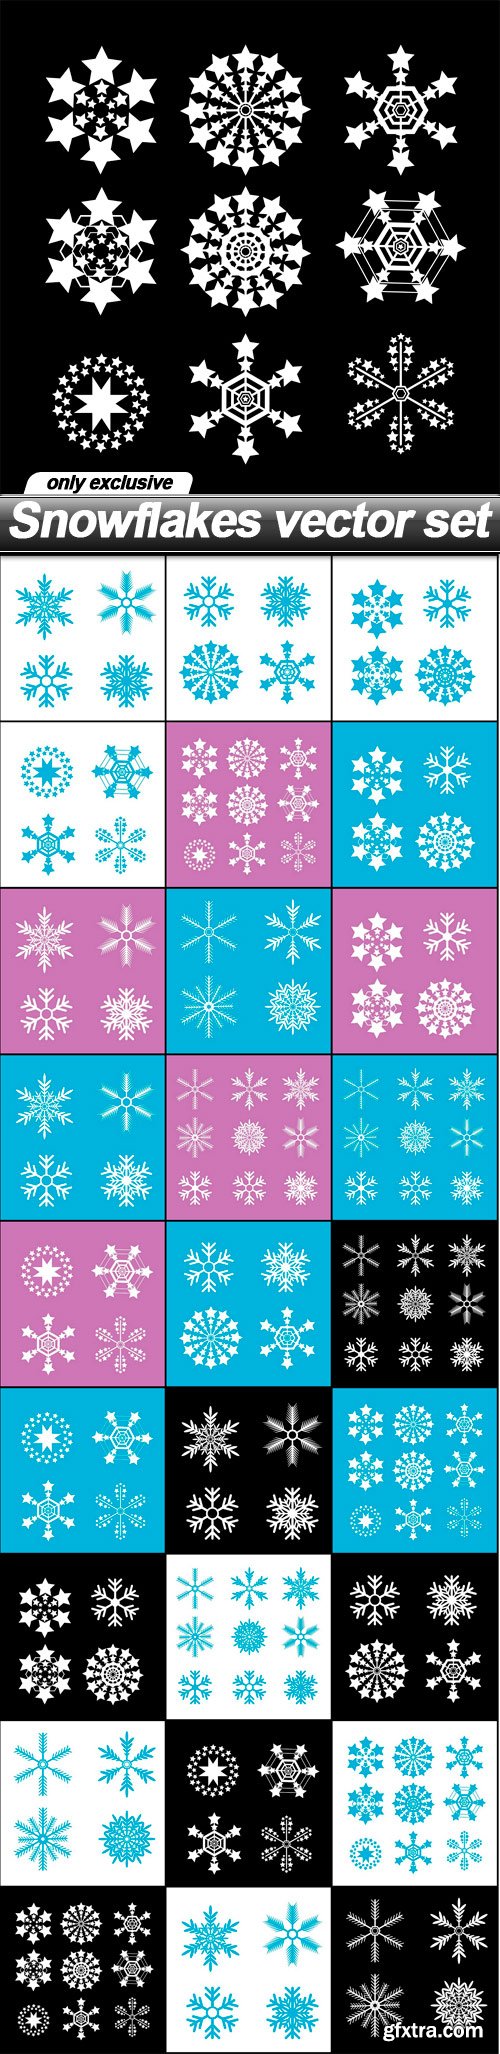 Snowflakes vector set - 26 EPS